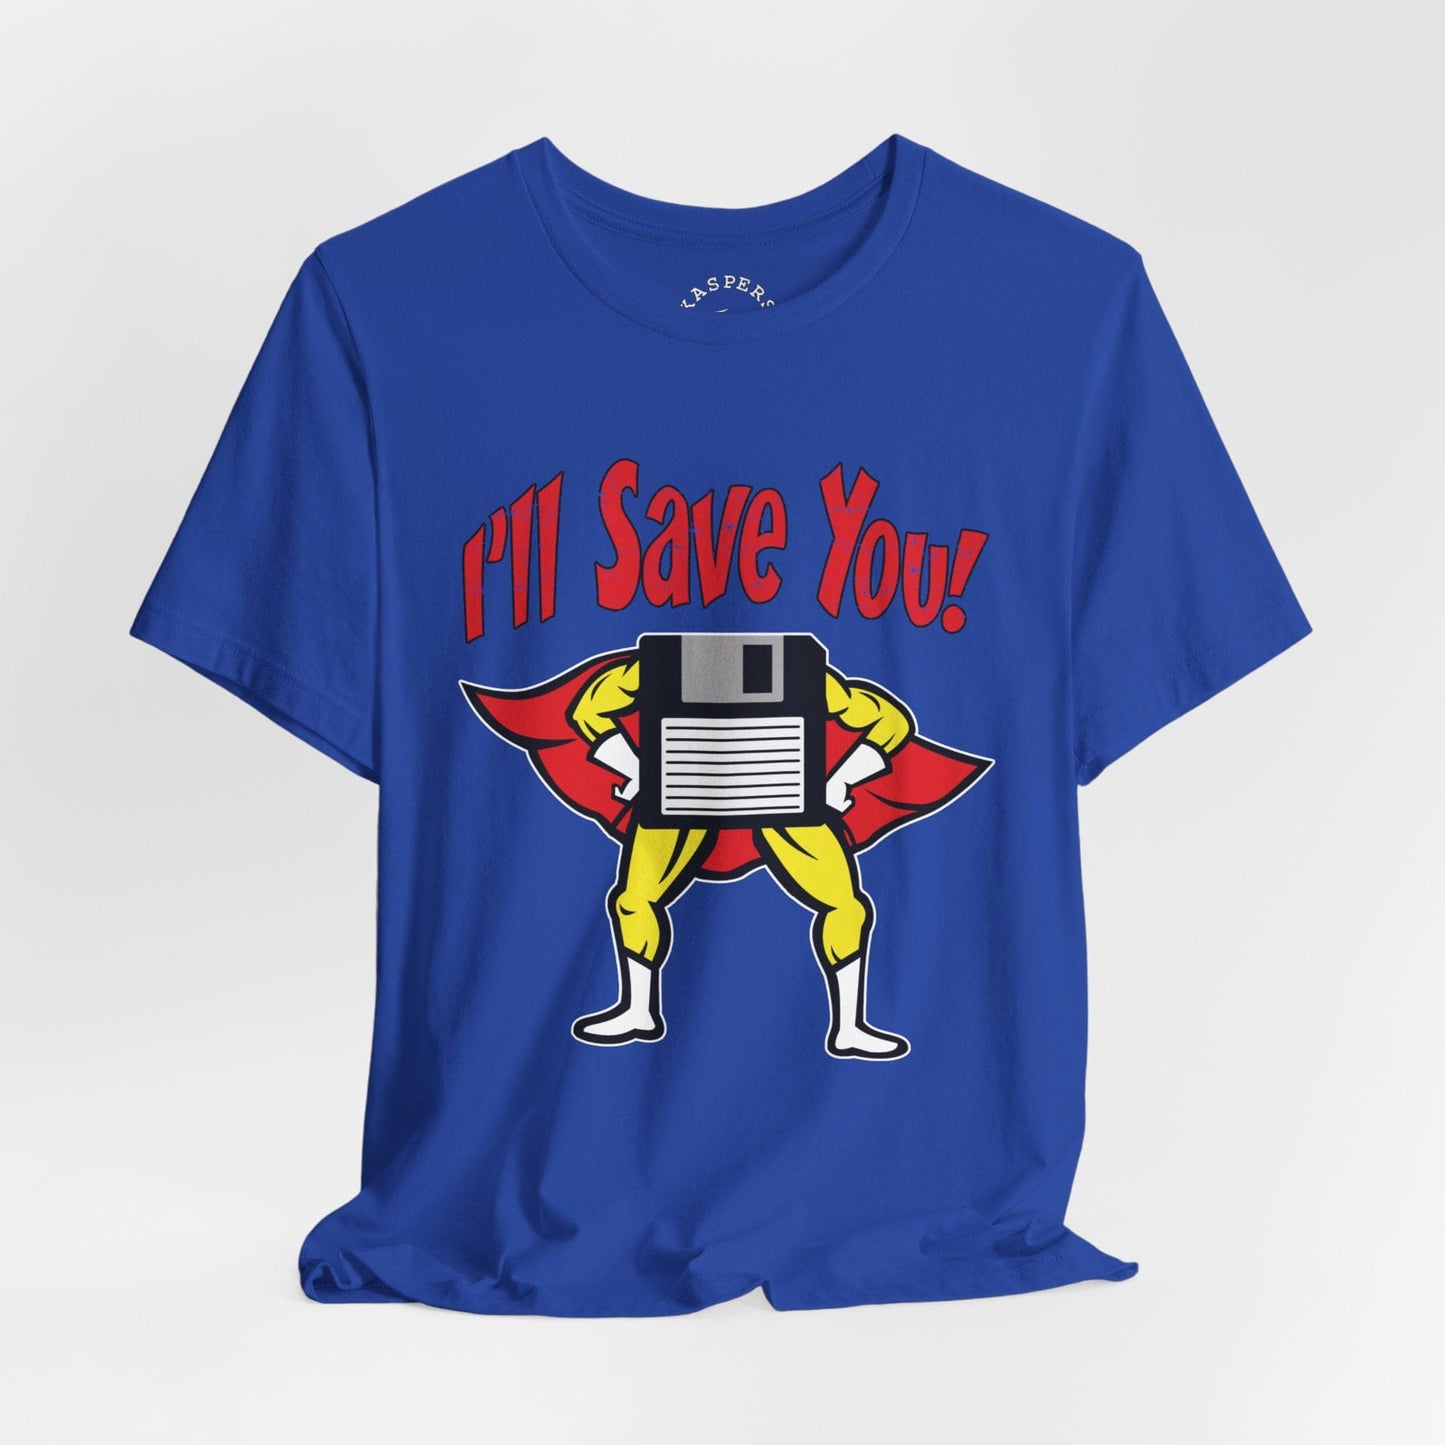 I'll Save You - Floppy Disk T-Shirt